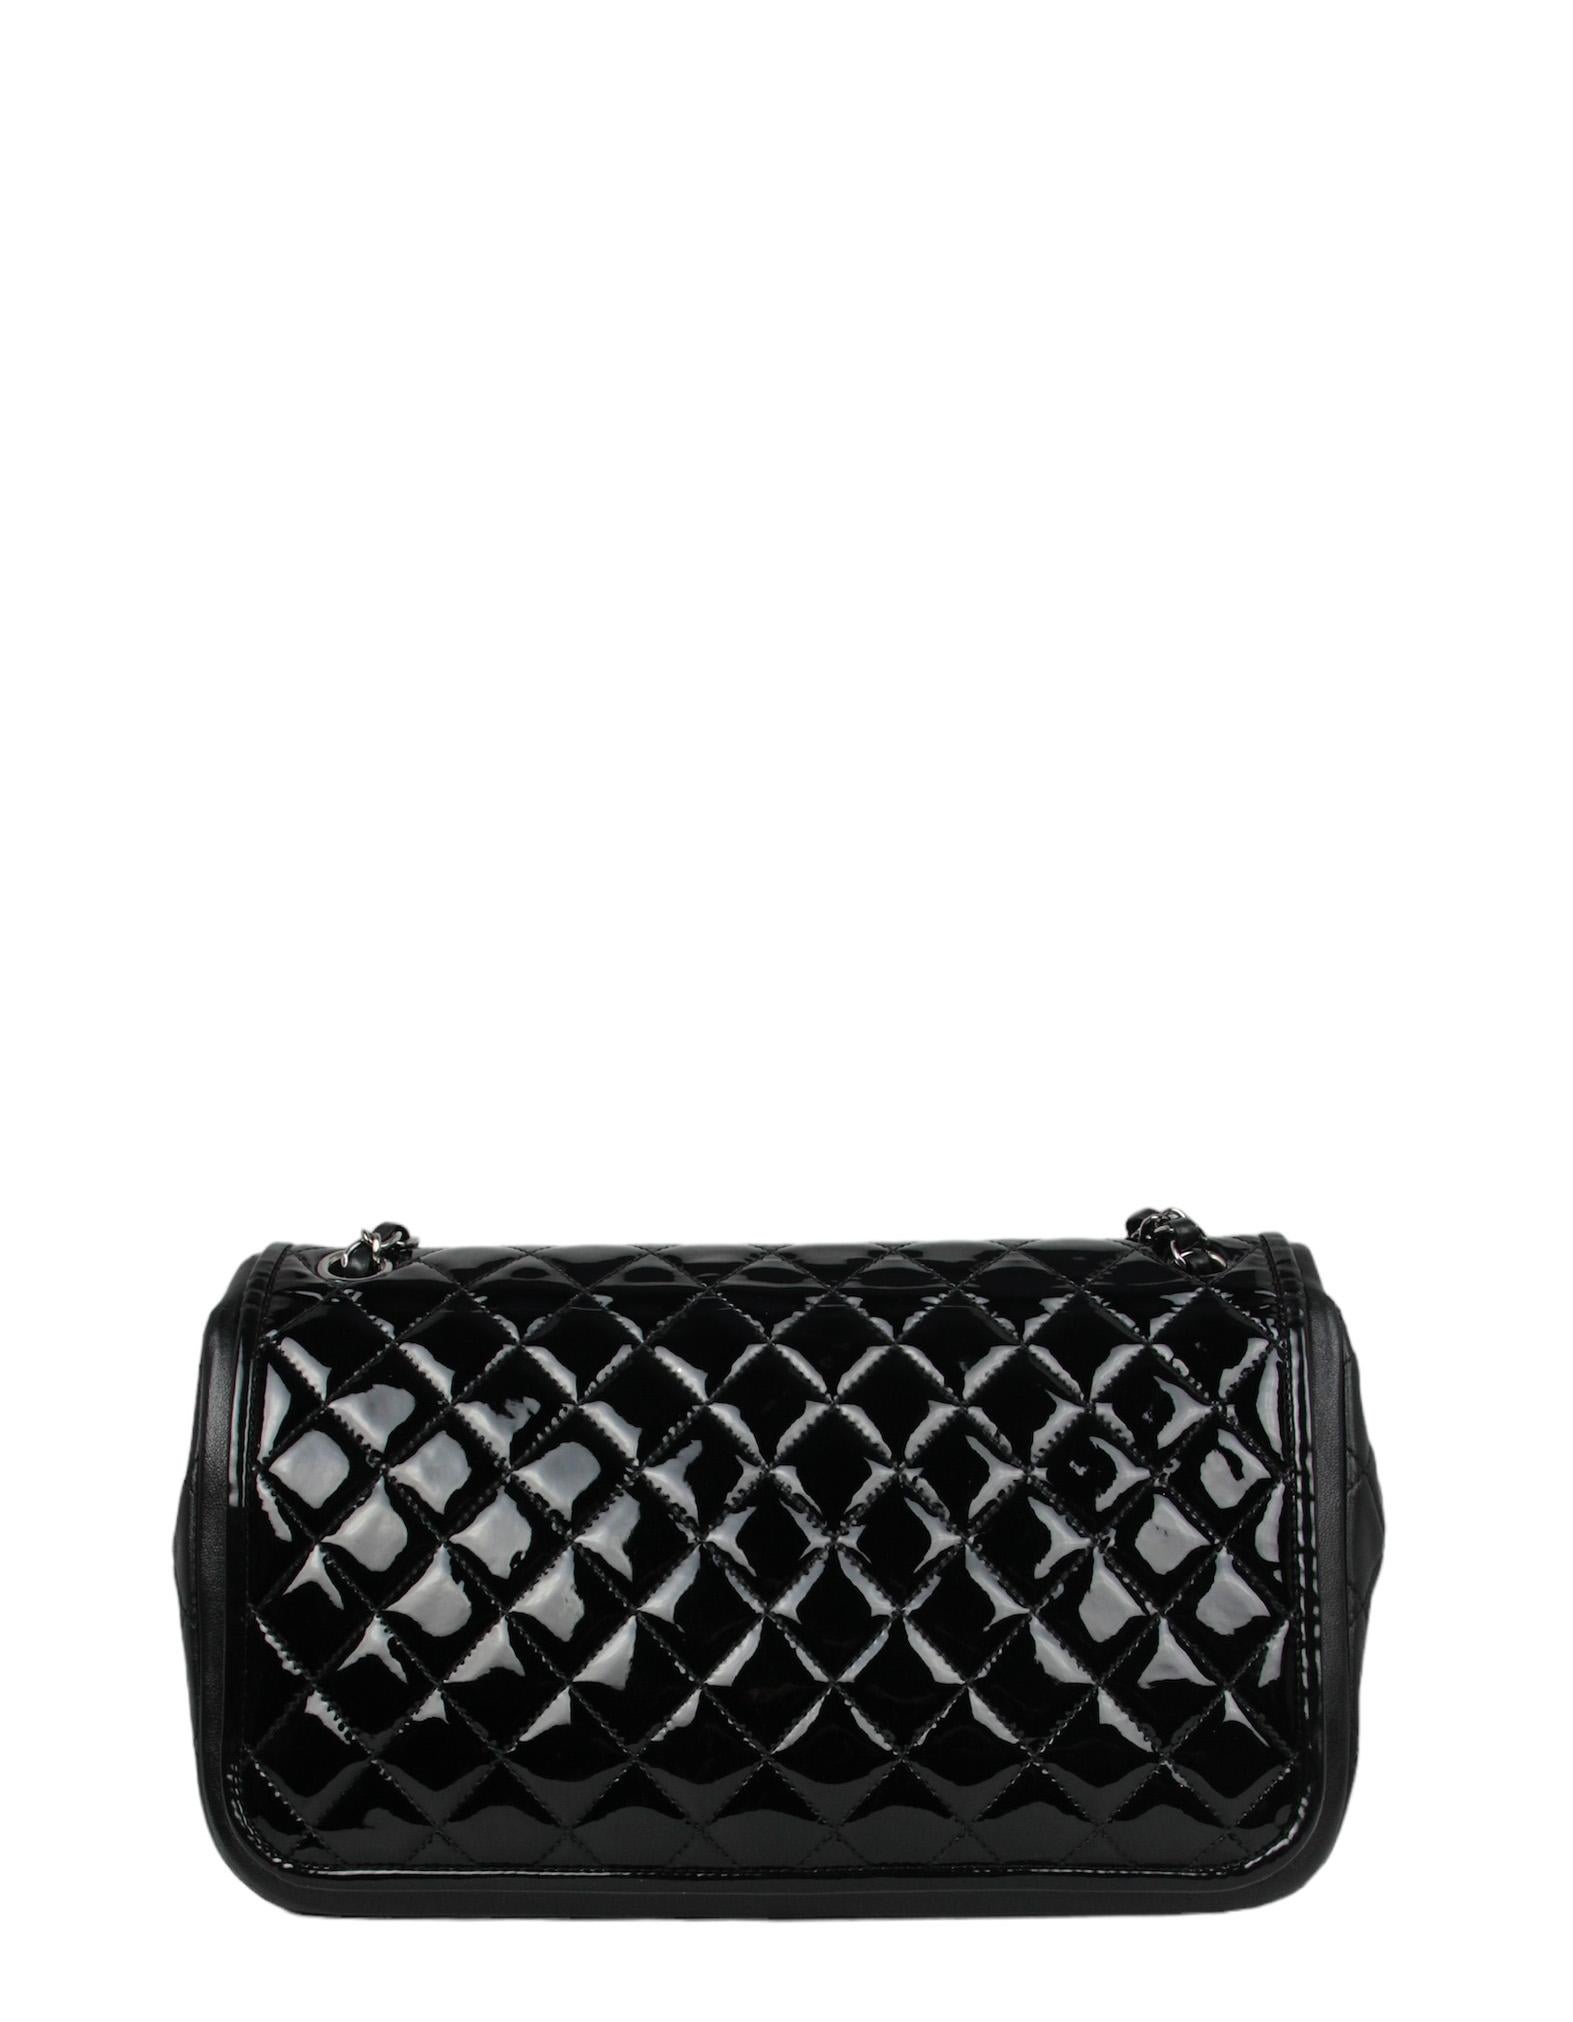 Women's Chanel Black Classic Twist Patent Flap Bag w/ Lambskin Trim For Sale